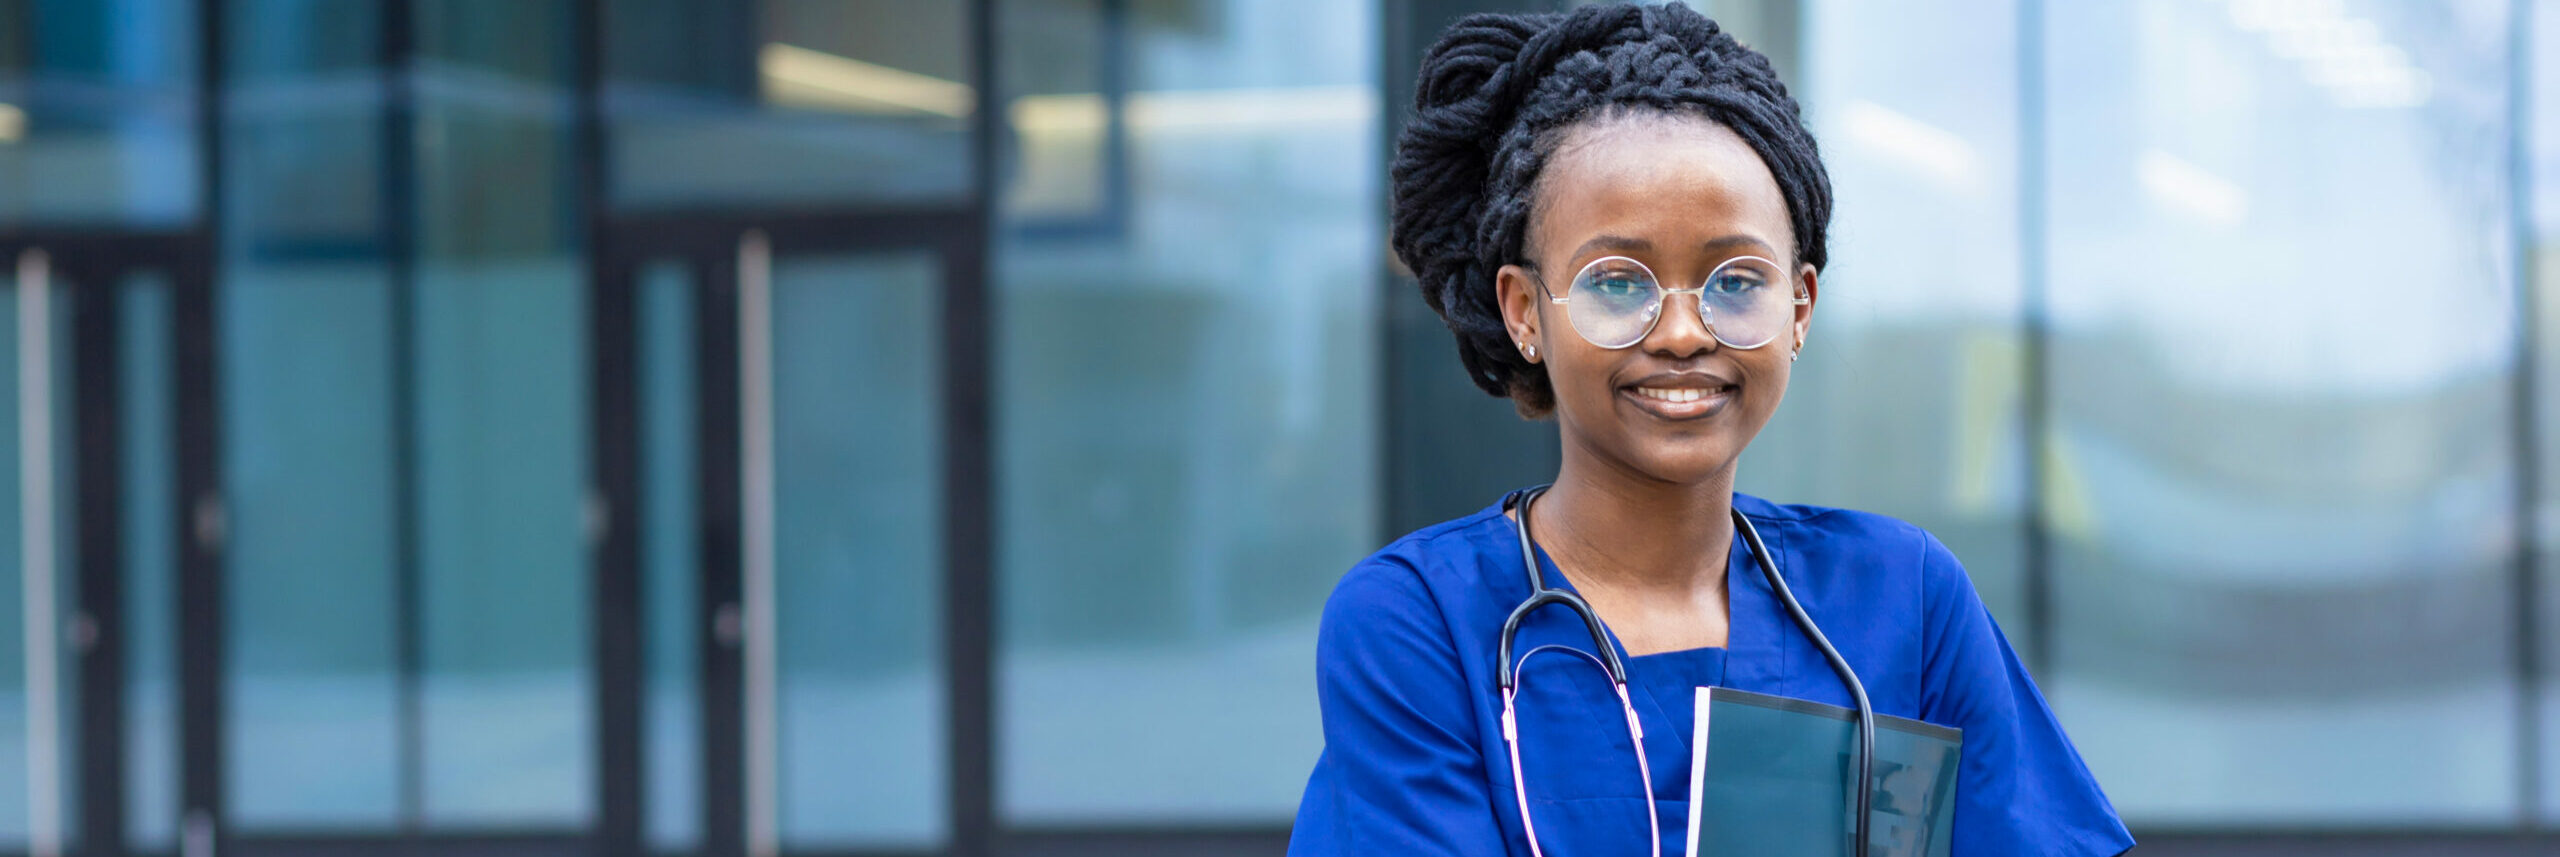 Health care student Black woman Nurse doctor